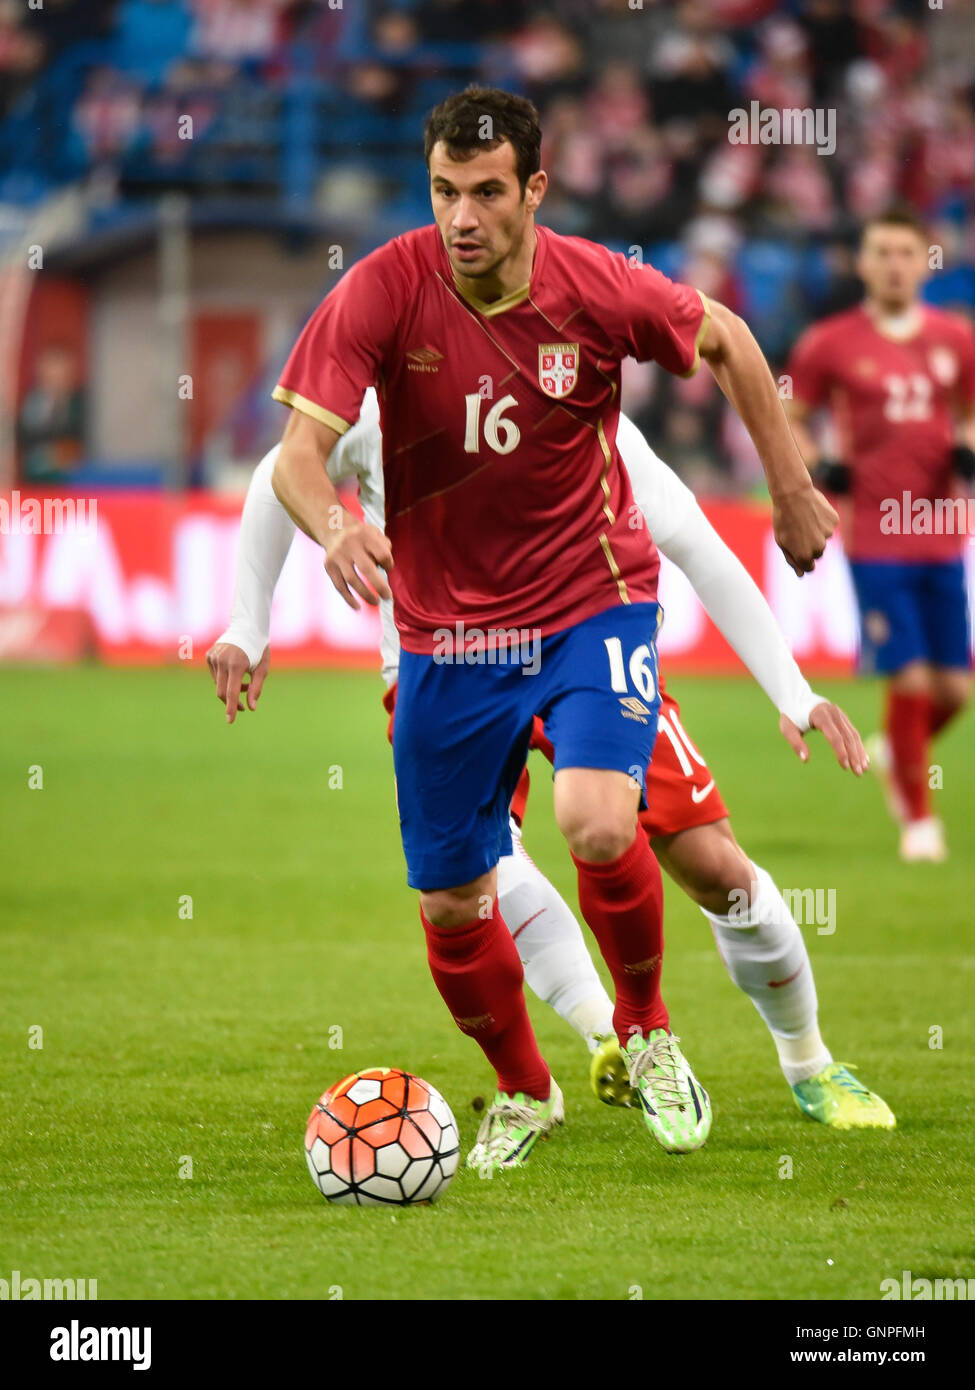 Posen, Polen - 23. März 2016: Luka Milivojevic in Aktion während internationaler Fußball Freundschaftsspiel Polen Vs Serbien 1:0. Stockfoto